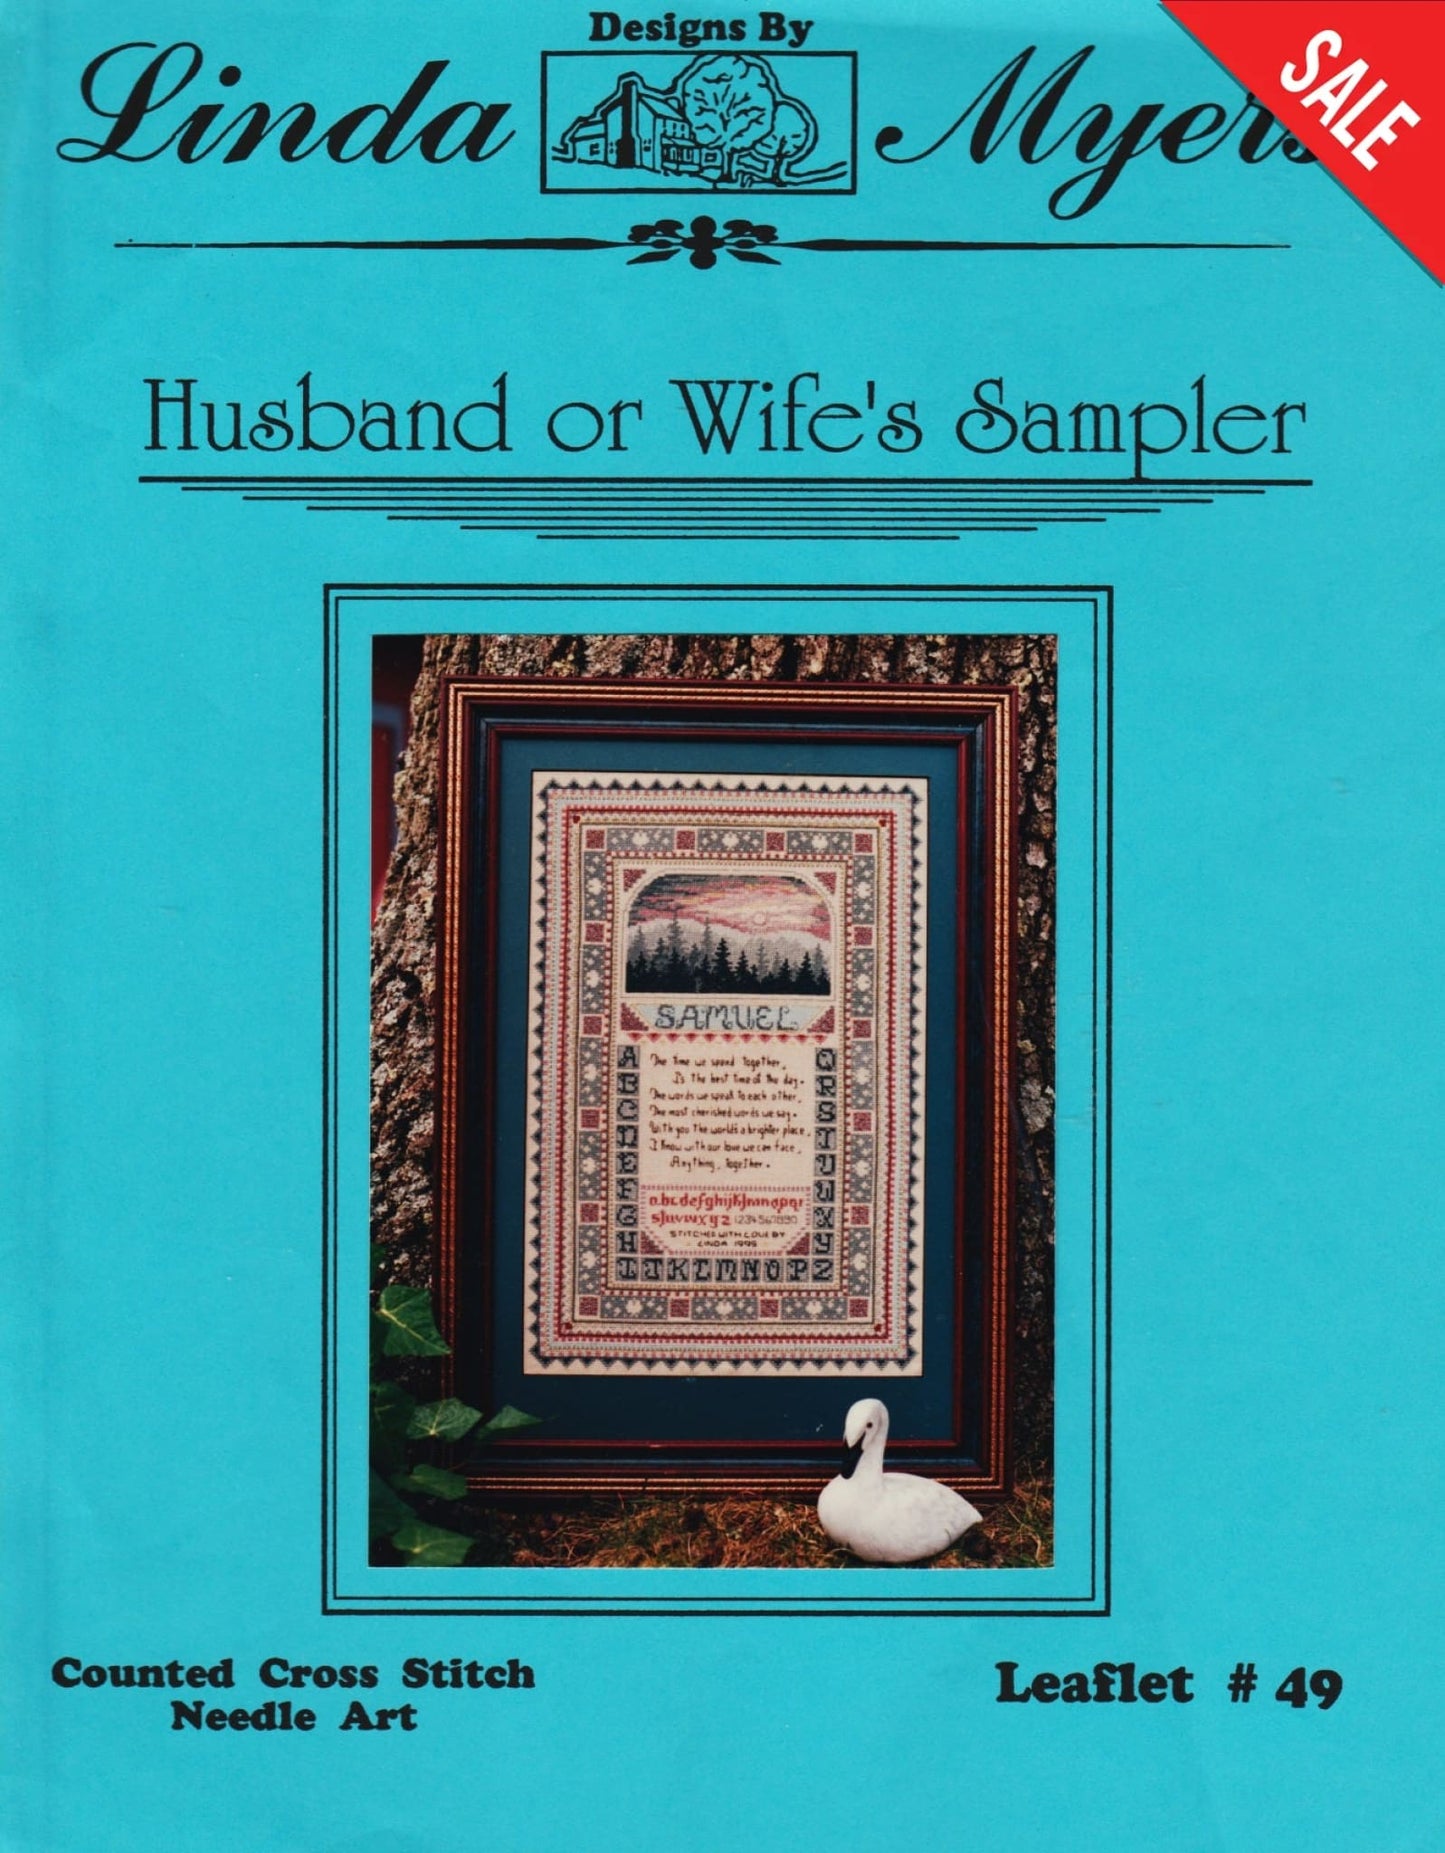 Linda Myers Husband or Wife's Sampler 49 cross stitch pattern